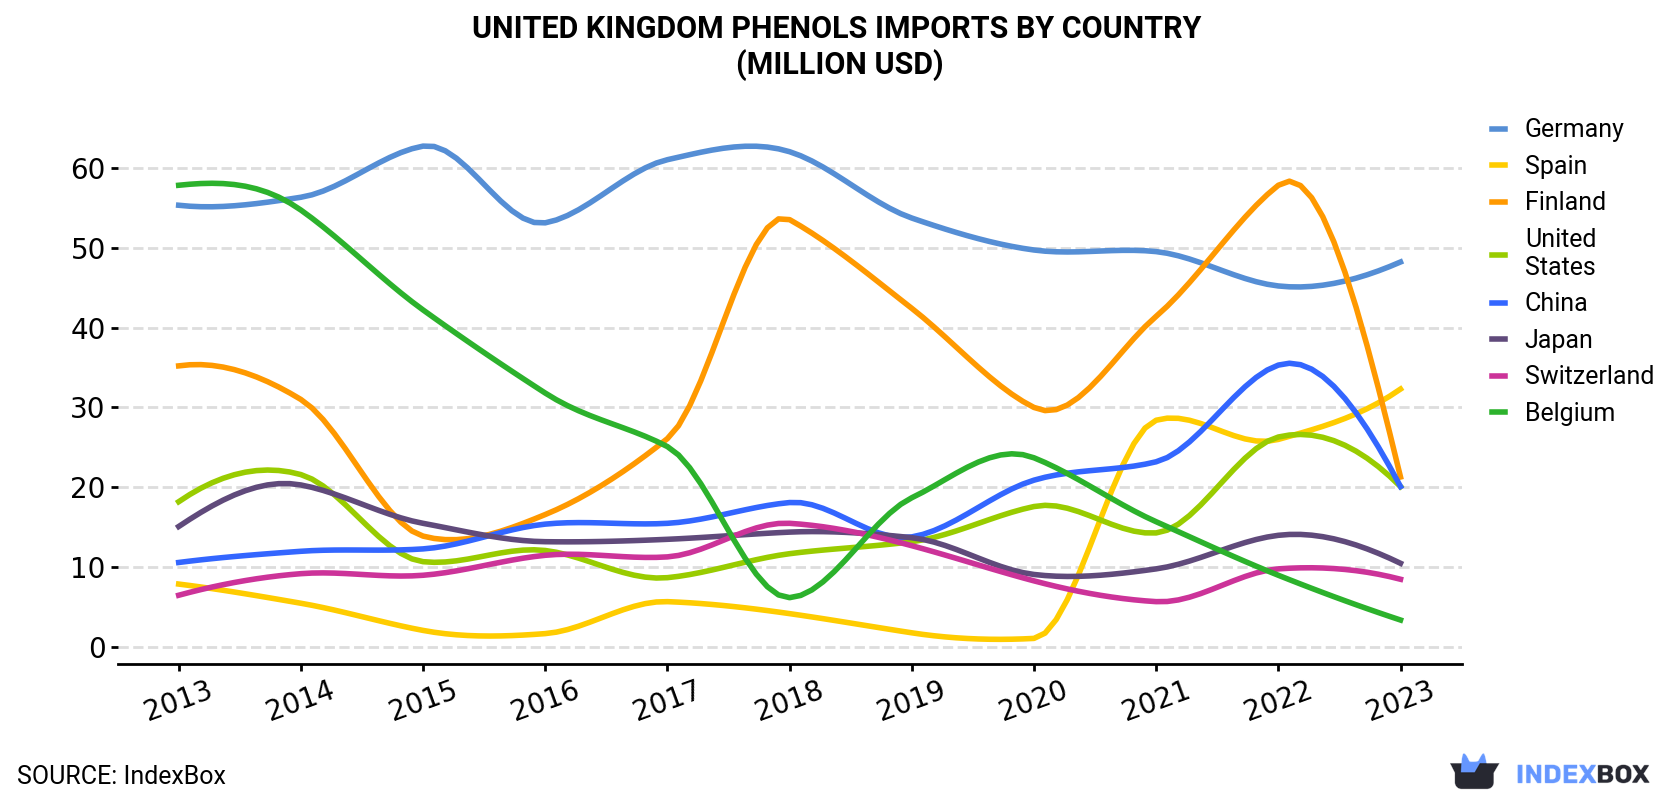 United Kingdom Phenols Imports By Country (Million USD)